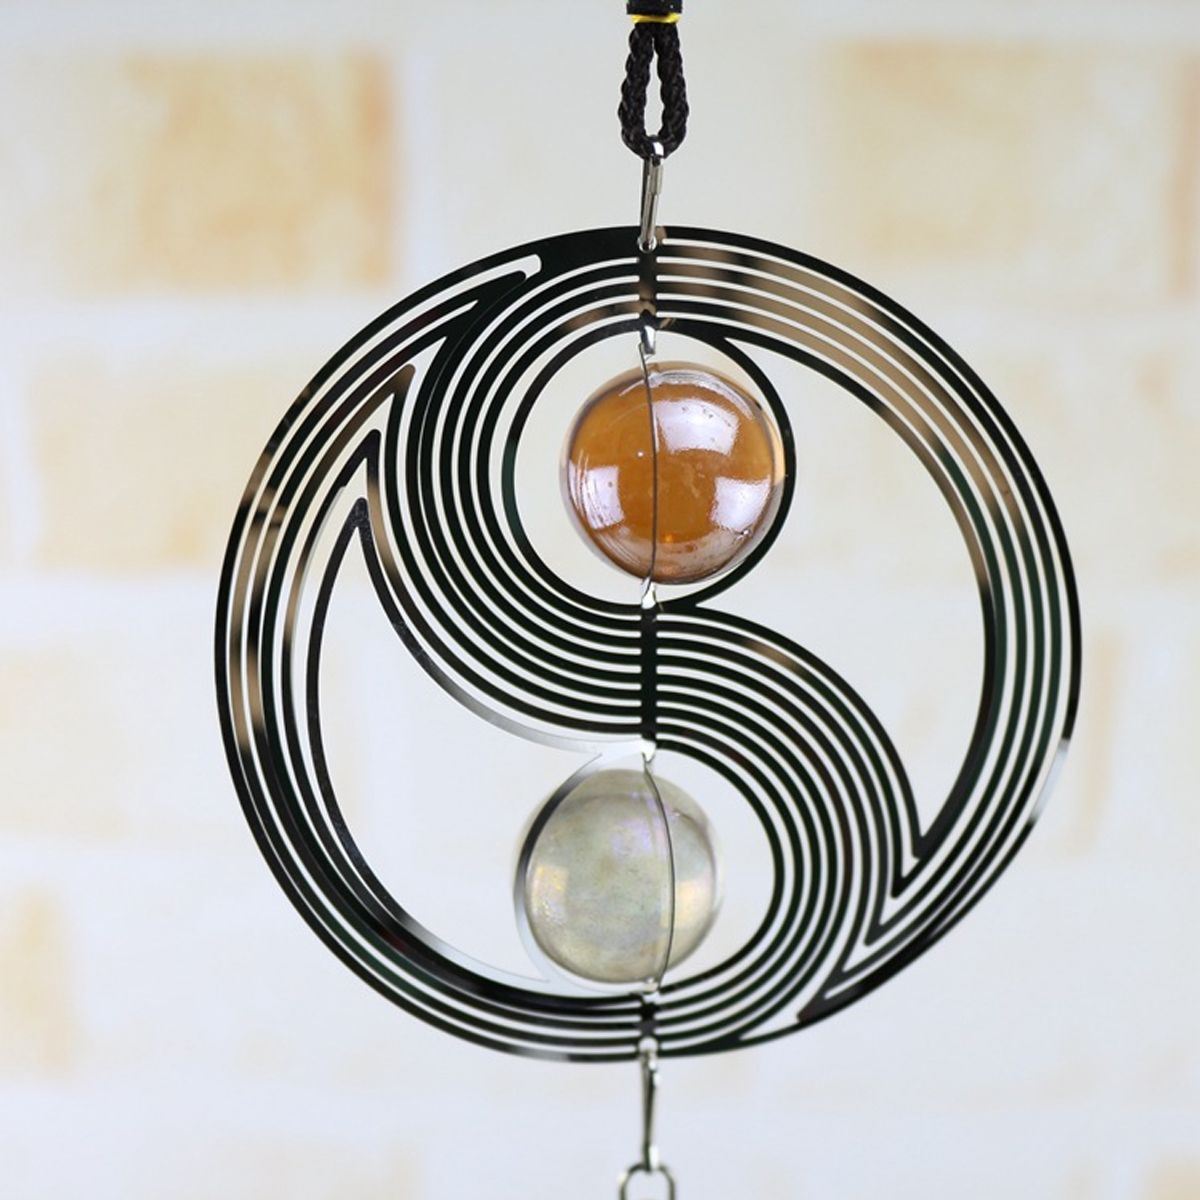 Metal-Hanging-Garden-Wind-Spinner-Round-Crystal-Ball-Bell-Garden-Home-Ornament-1682662